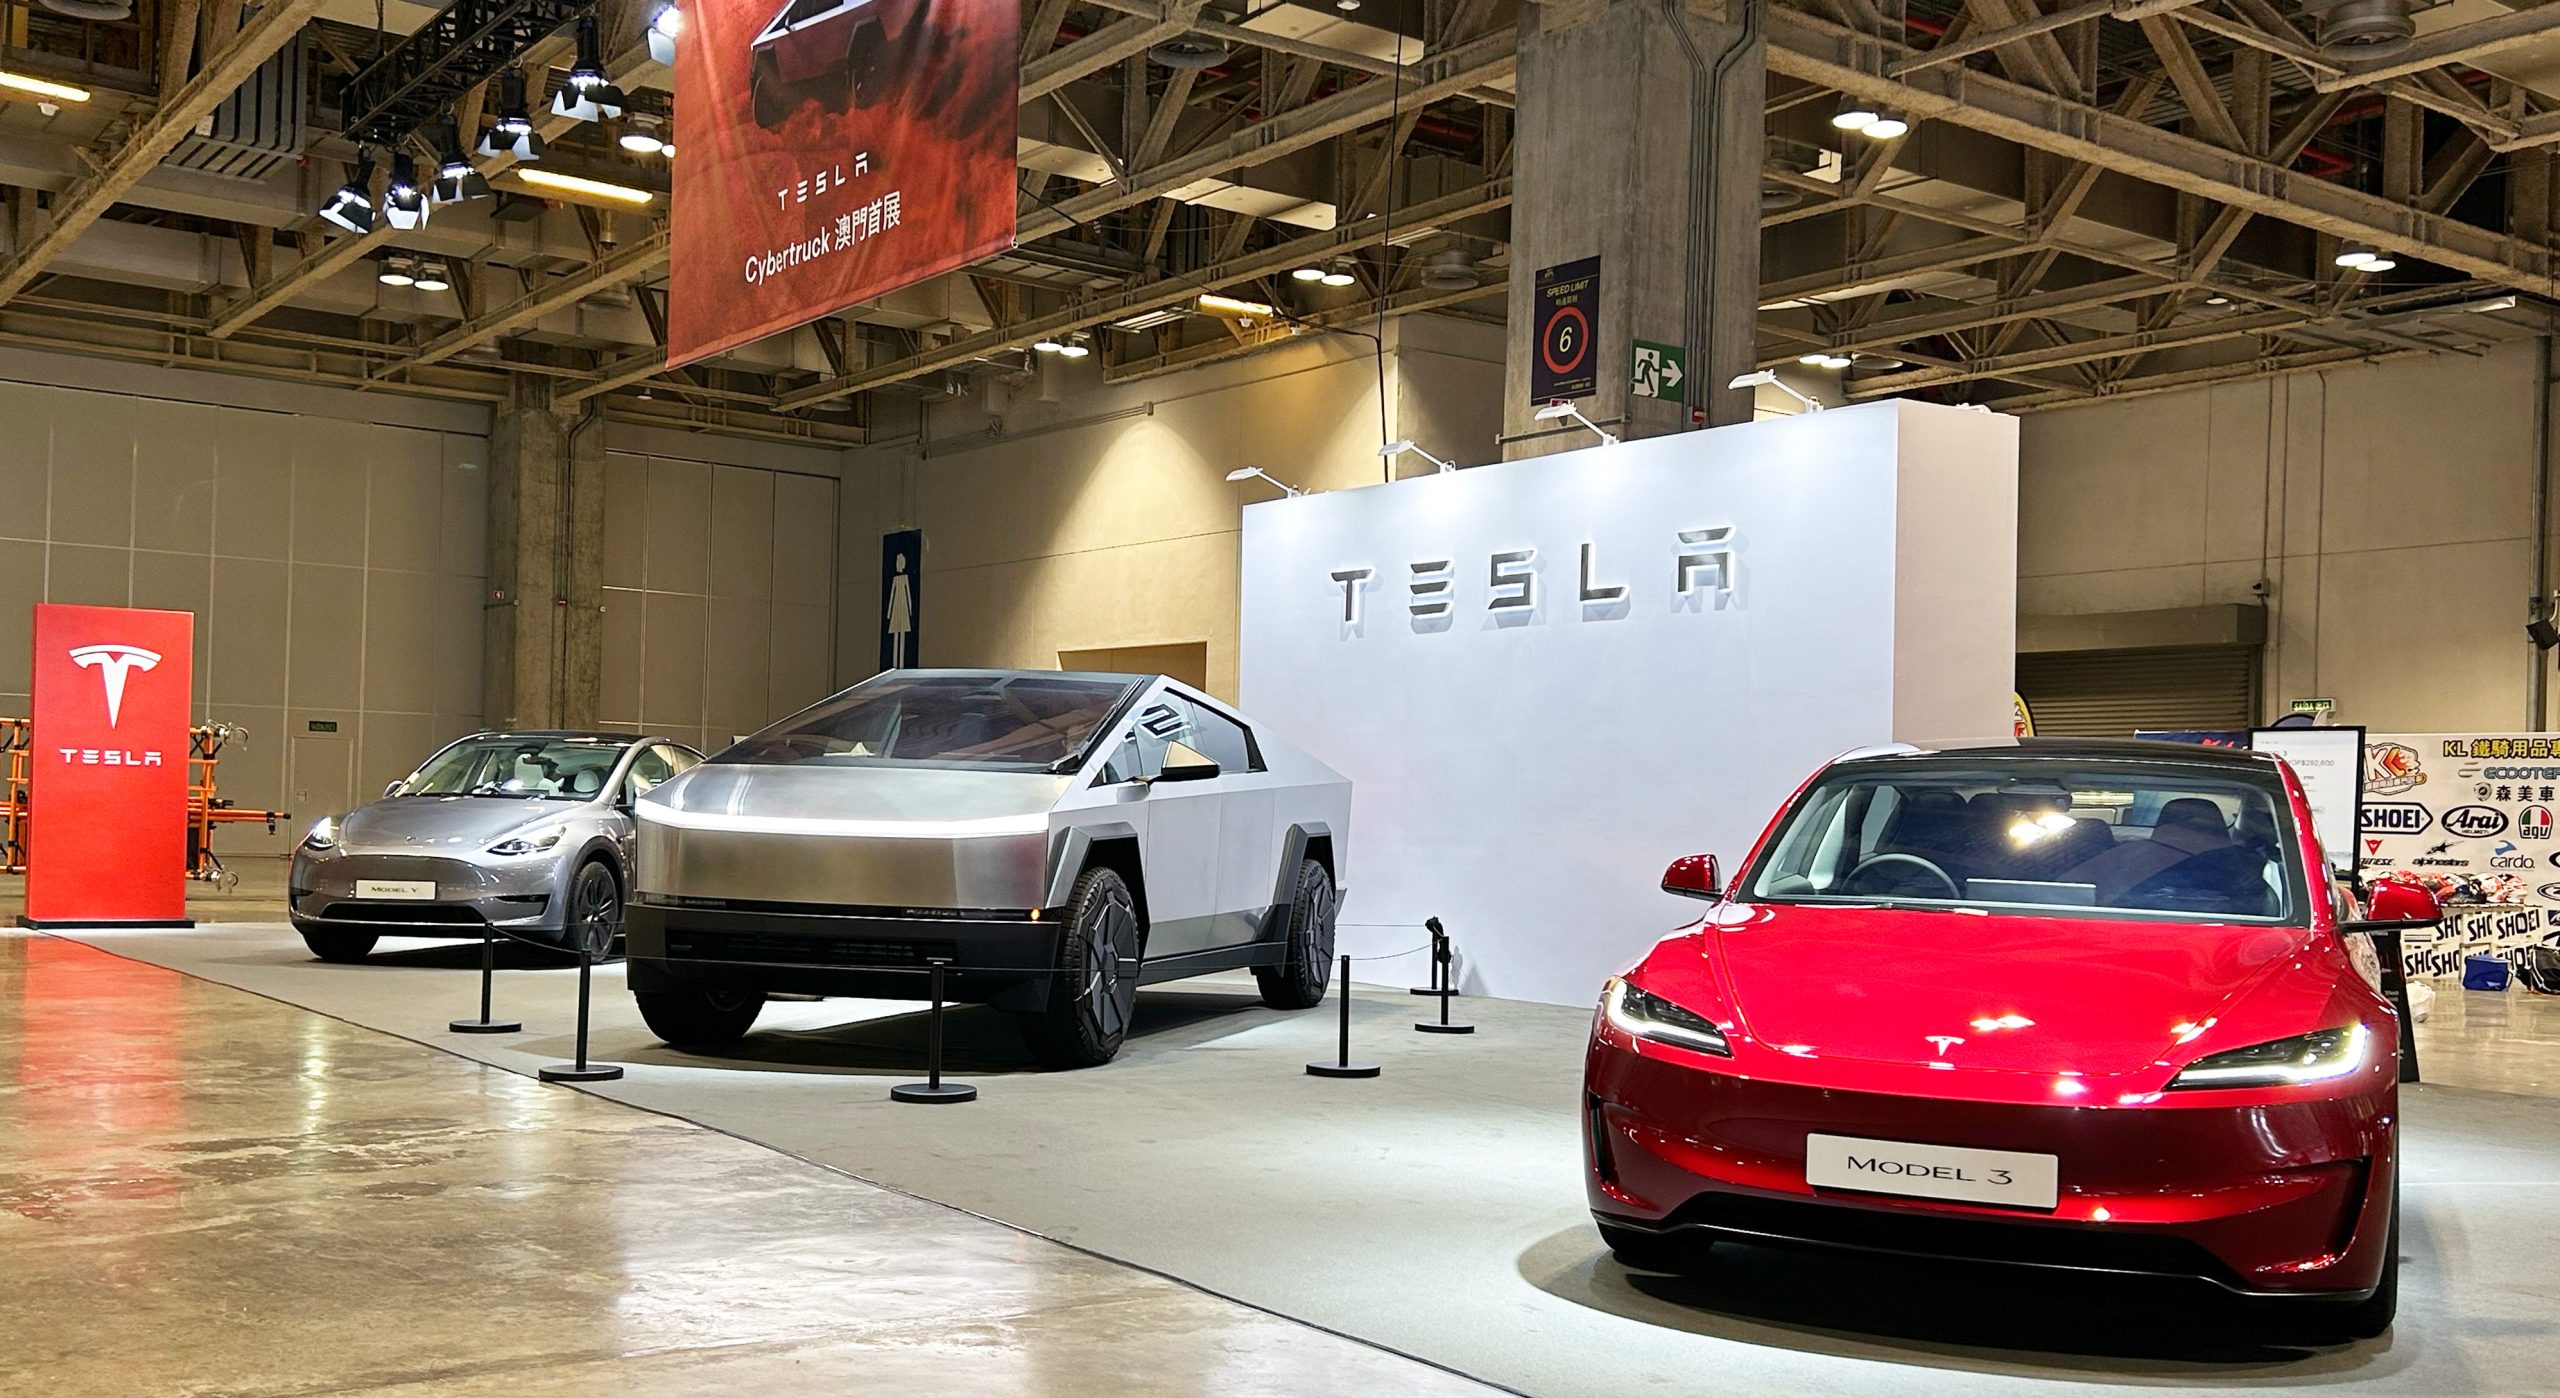 Tesla Displays Cybertruck in Macau